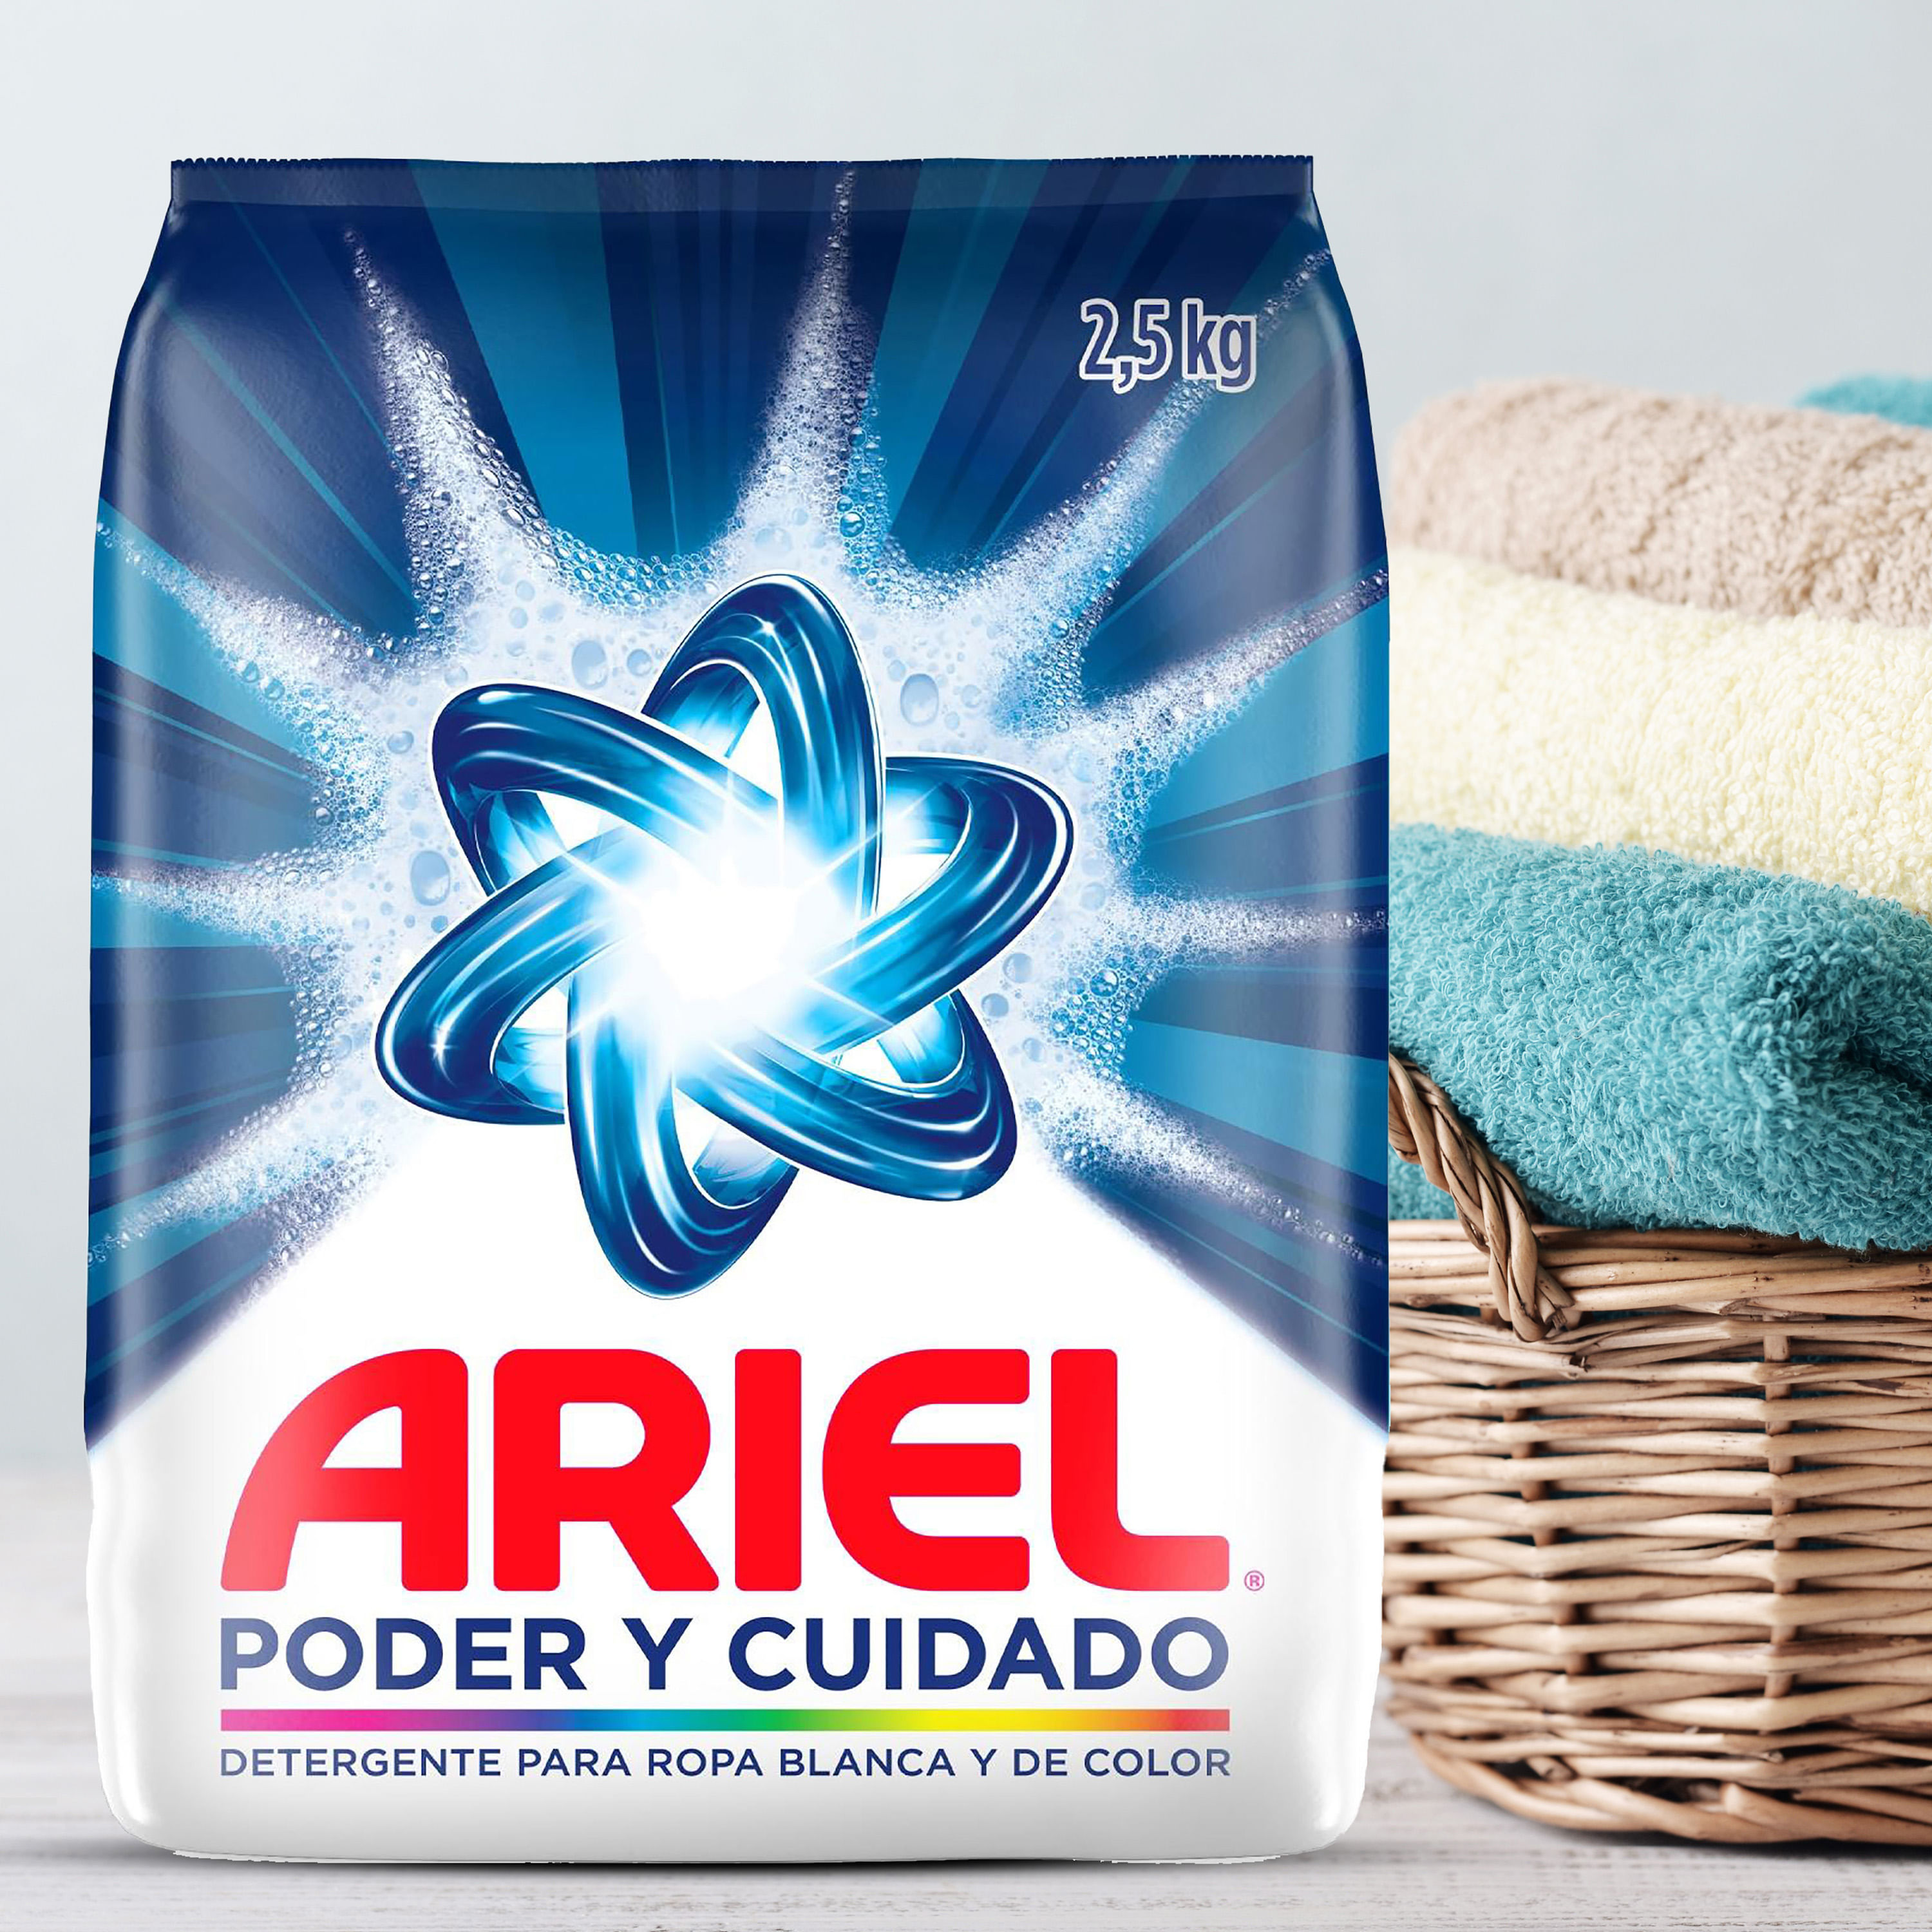 Comprar Detergente Liquido Fab Paraiso Floral -8300ml, Walmart Guatemala -  Maxi Despensa